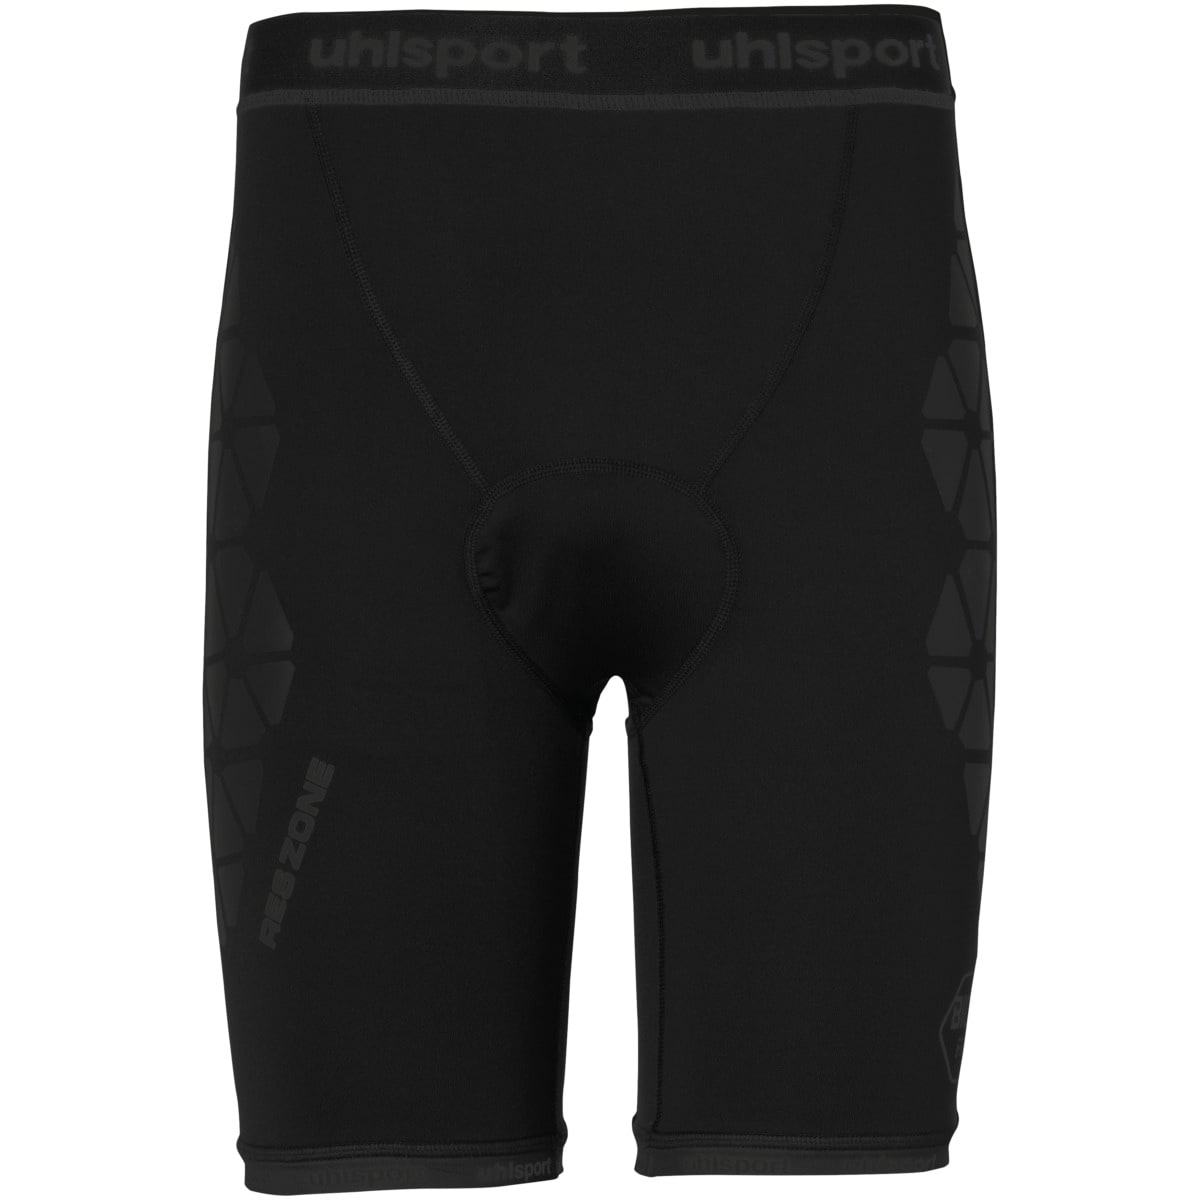 Uhlsport Bionikframe Unpadded Short Black Edition schwarz